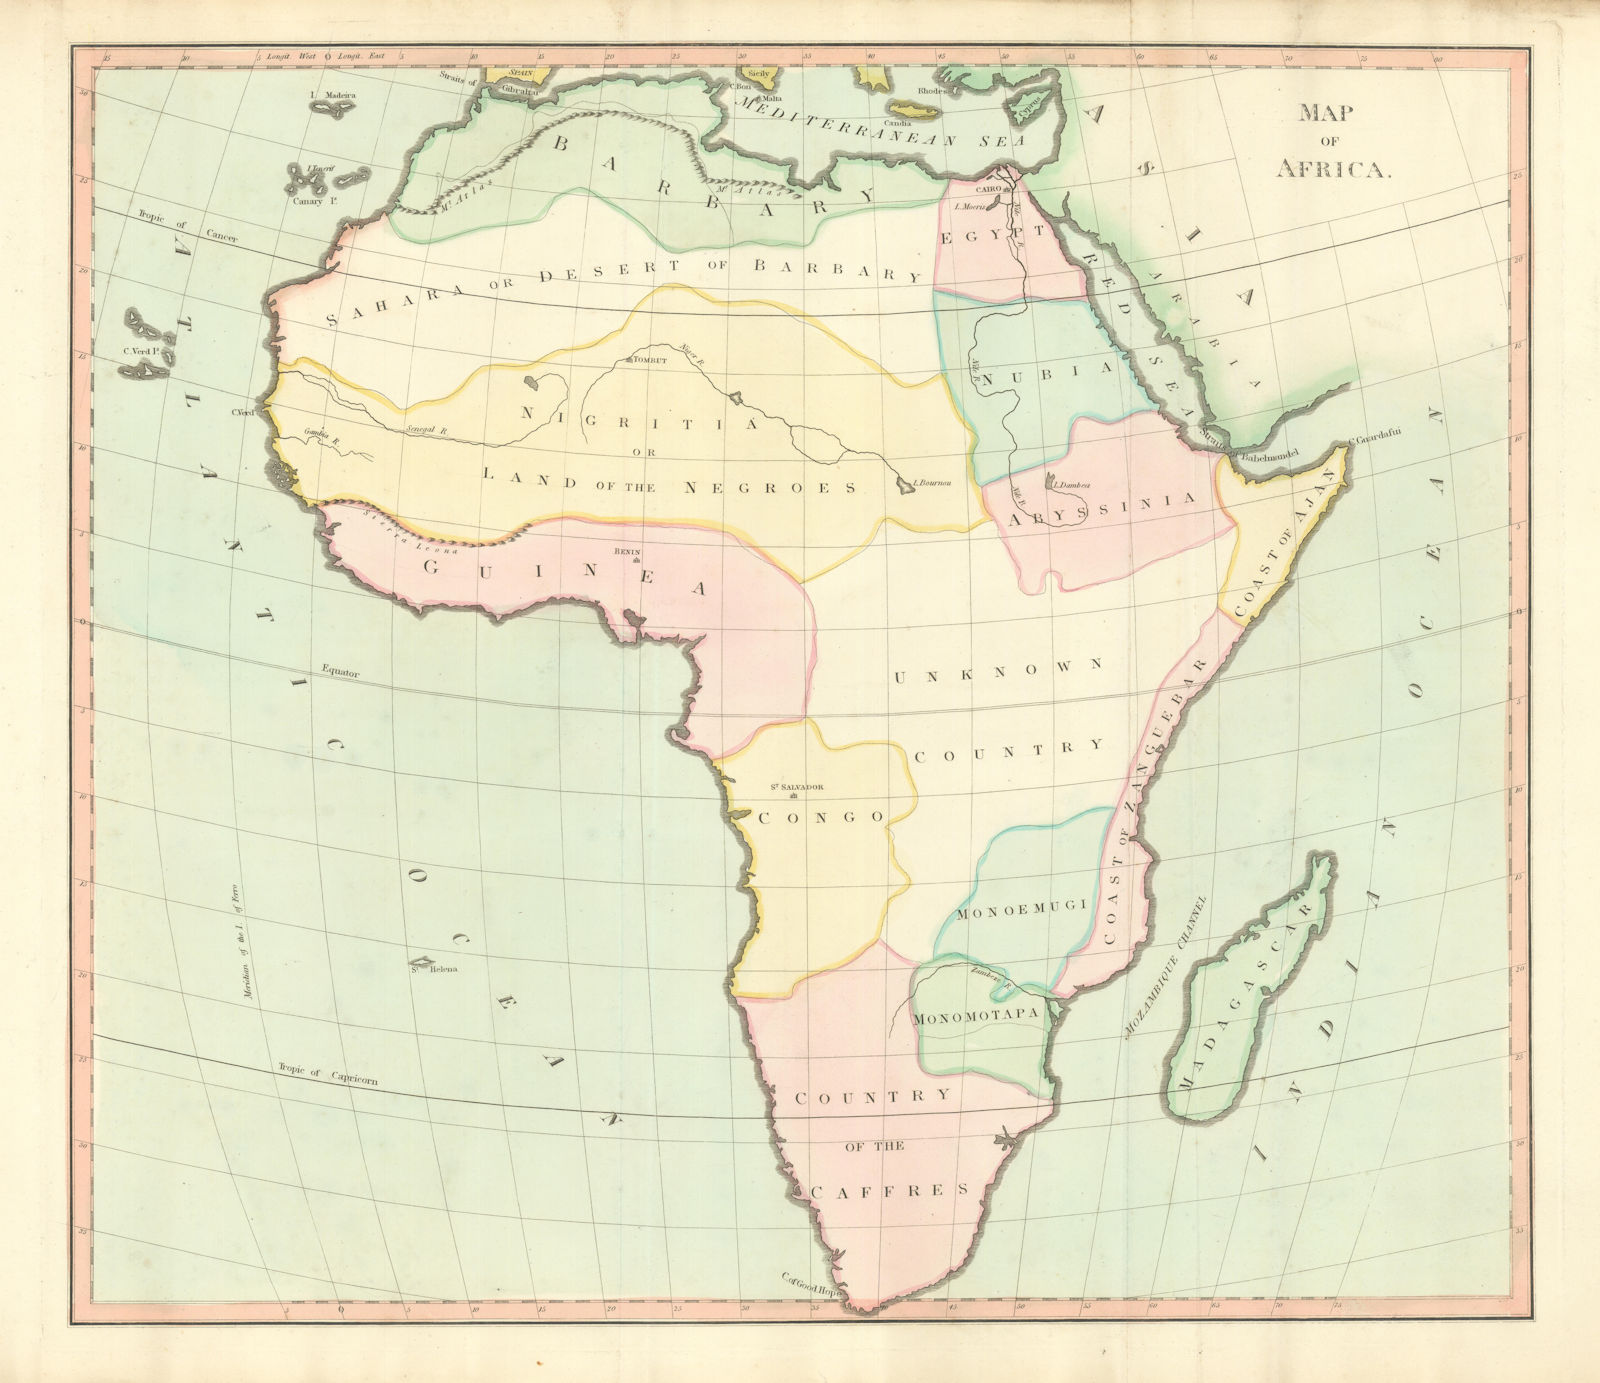 "Map of Africa" Caffres Unknown Congo Nigritia Monoemugi Ajan. D'ANVILLE 1815